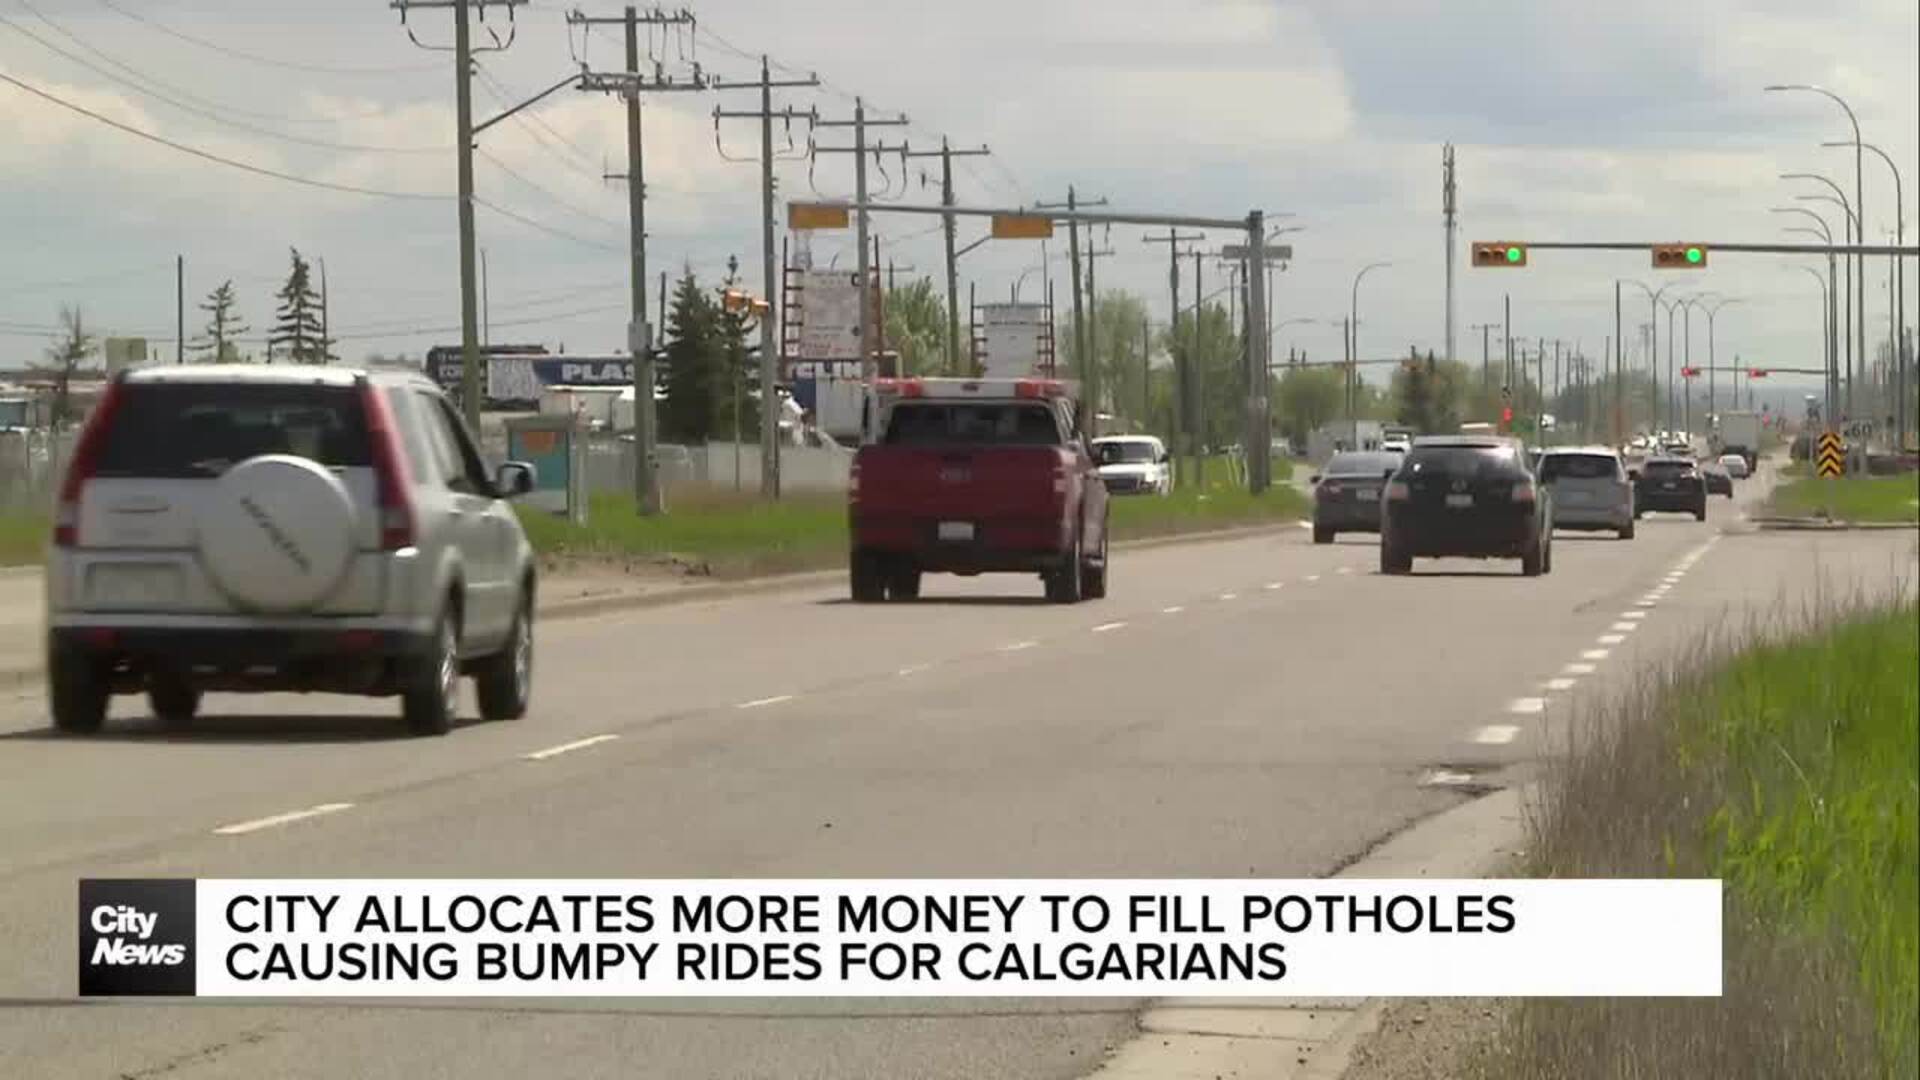 City allocates more money to fill potholes causing bumpy rides for Calgarians